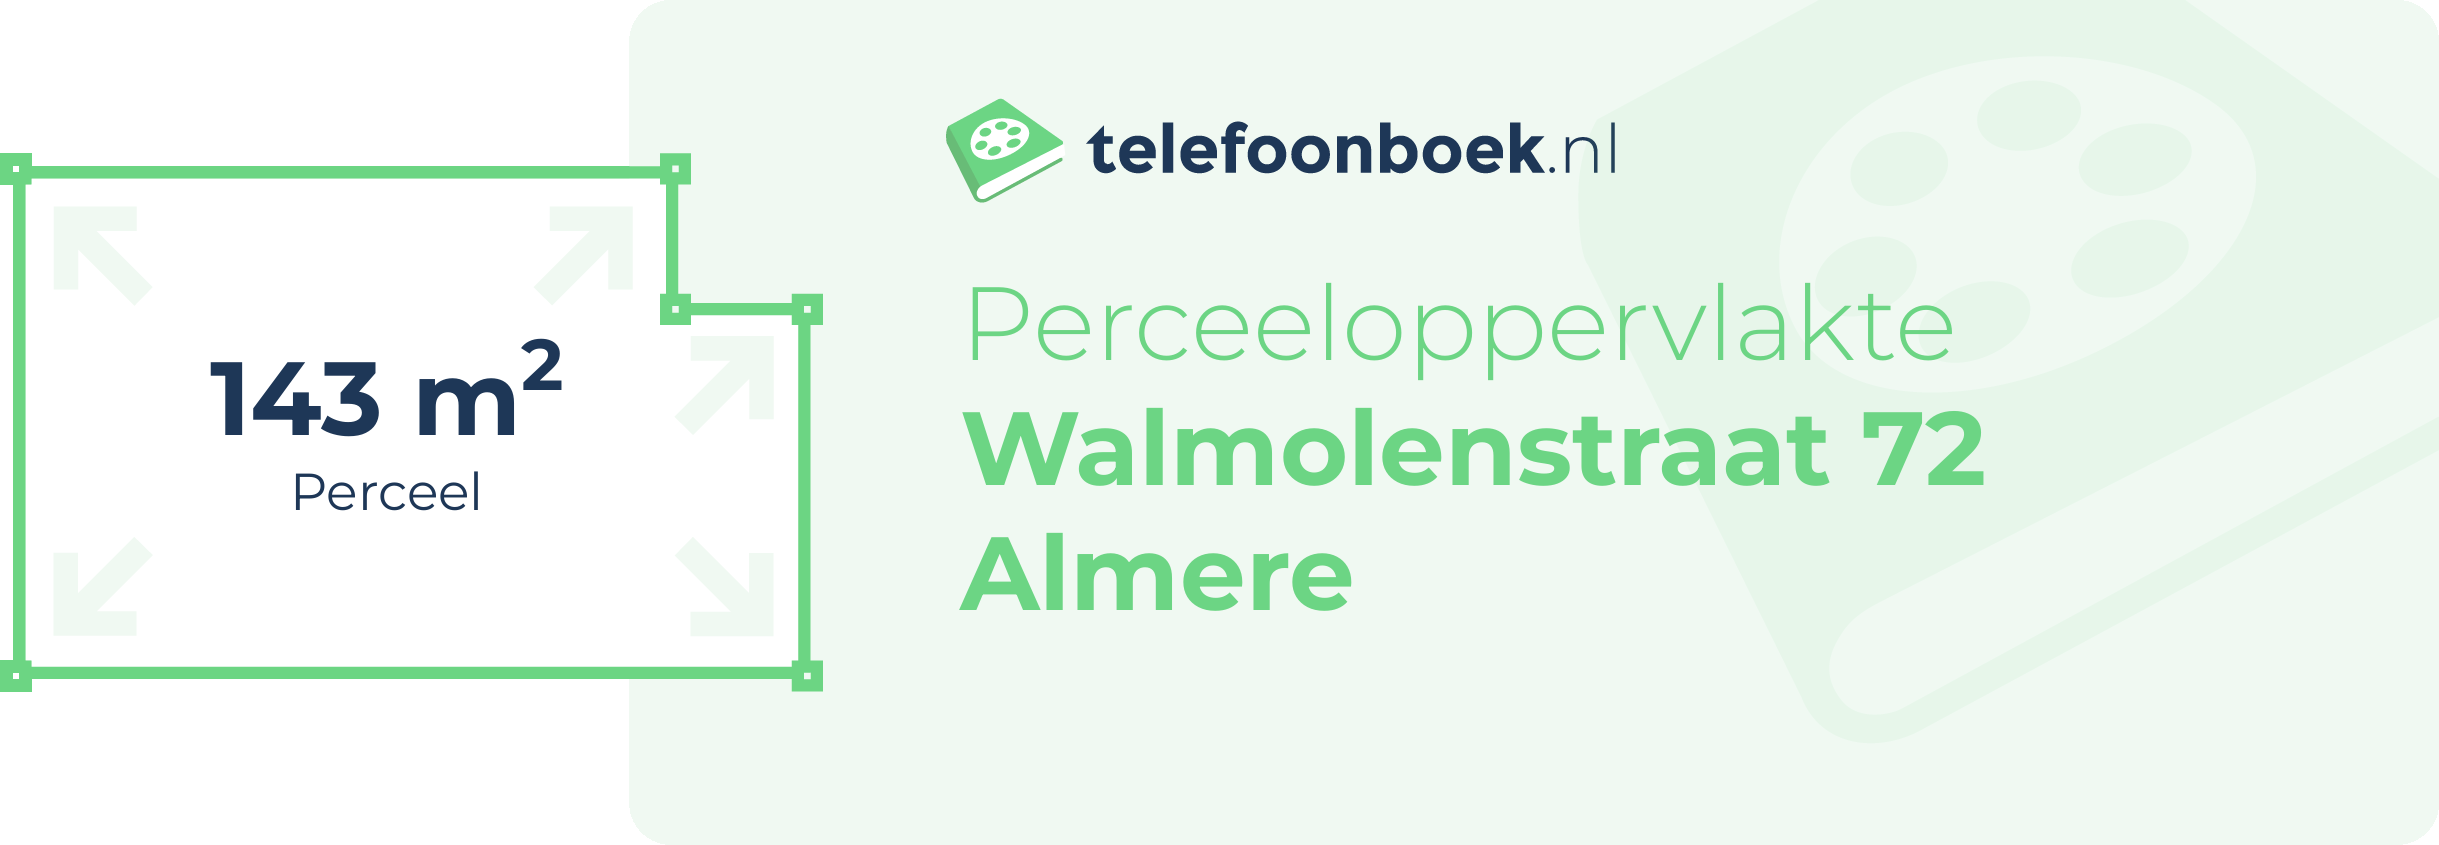 Perceeloppervlakte Walmolenstraat 72 Almere